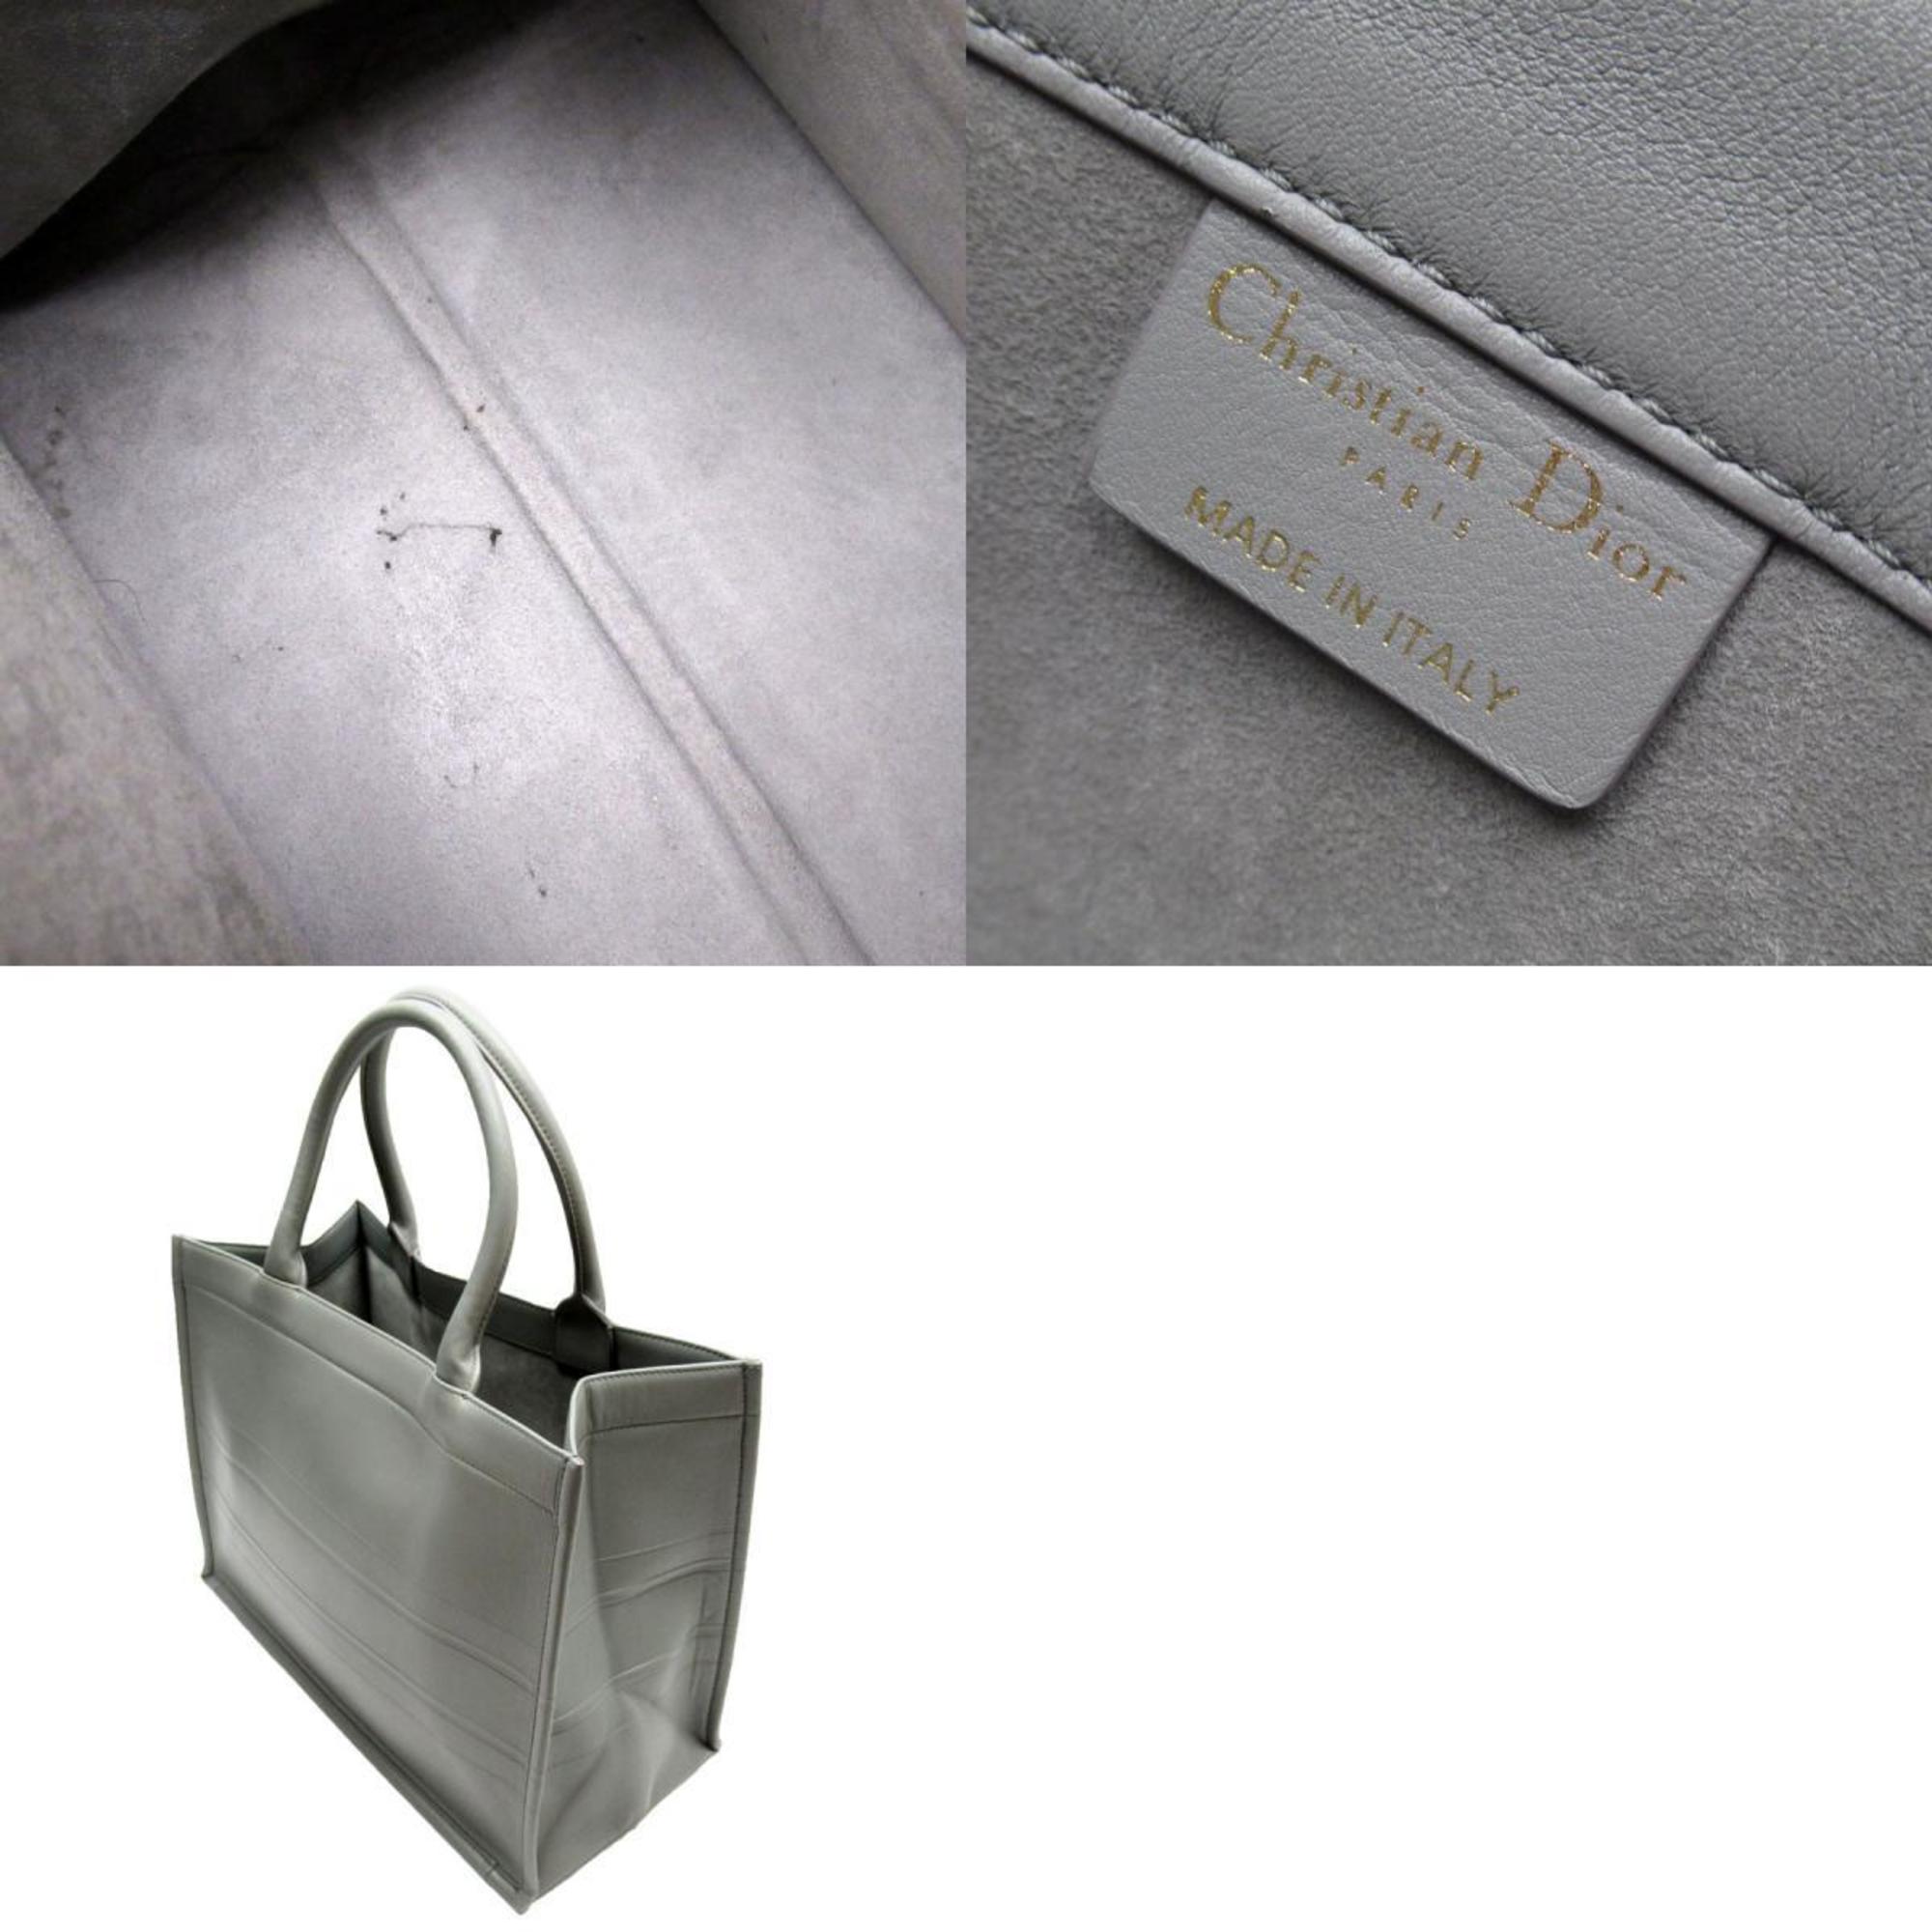 Christian Dior handbag tote bag book leather grey ladies w0322a